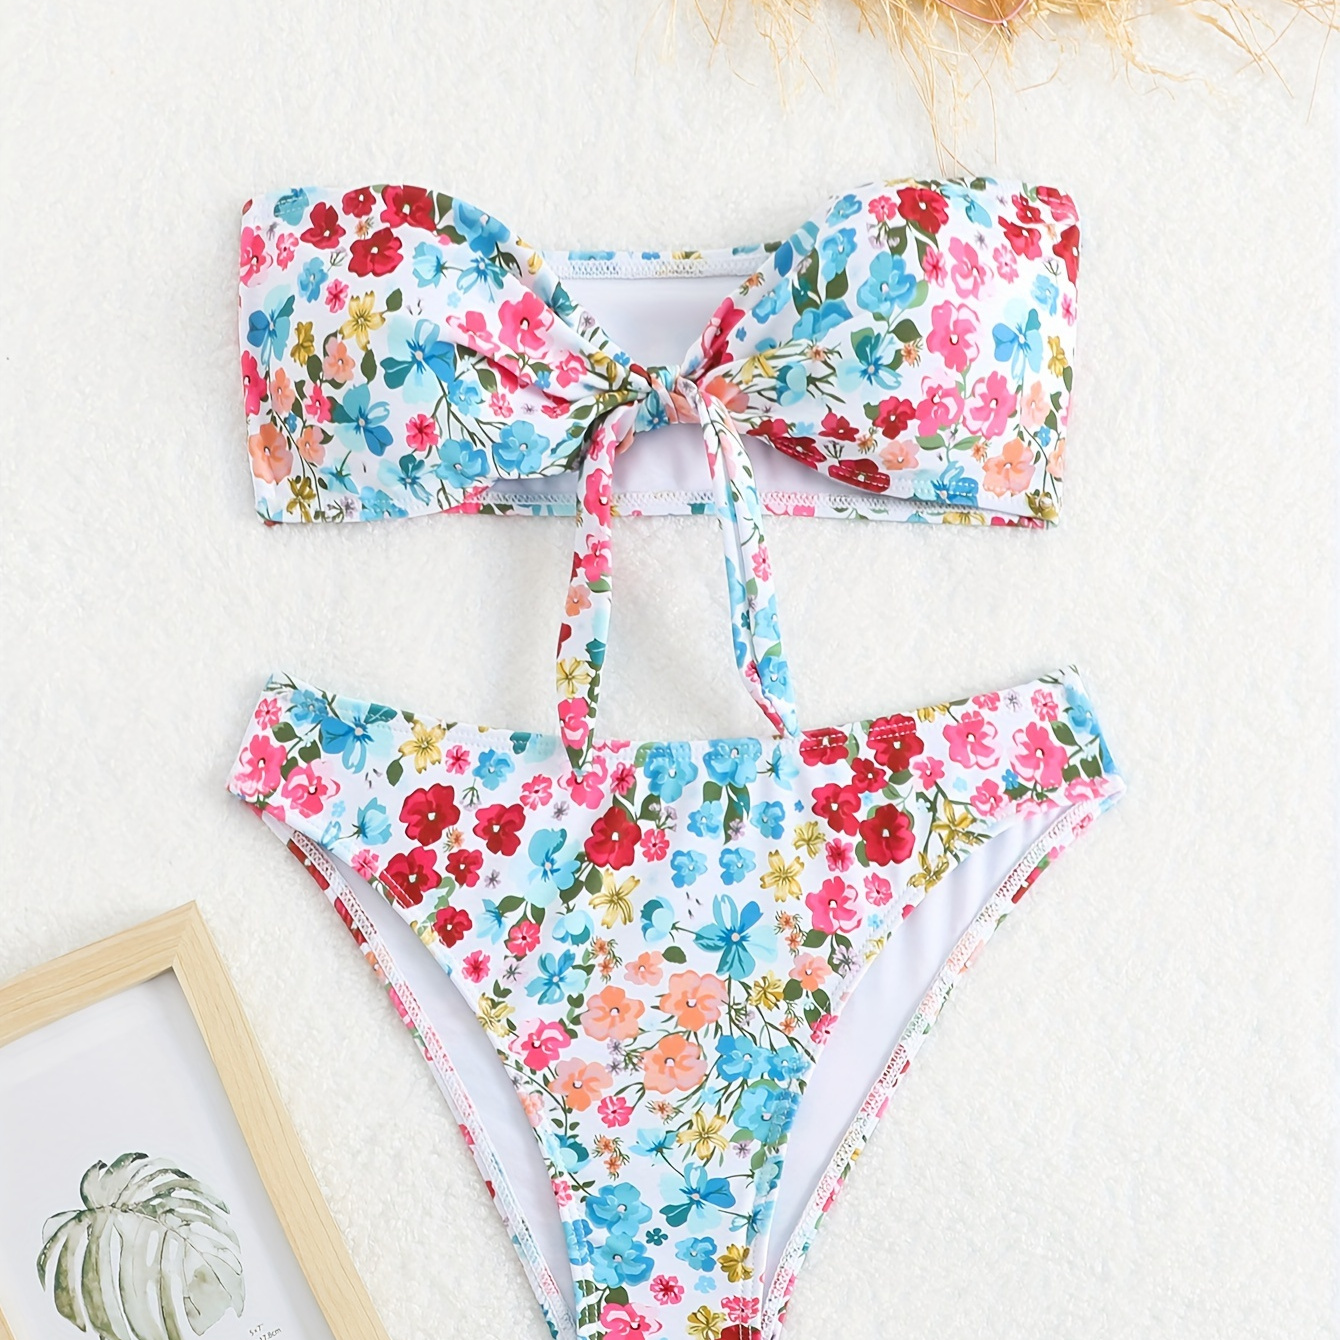 

Floral Print Bandeau Bikini Sets, Knot Front Strapless Tube Top High Cut Beachwear 2 Pieces Swimsuit, Women's Swimwear & Clothing